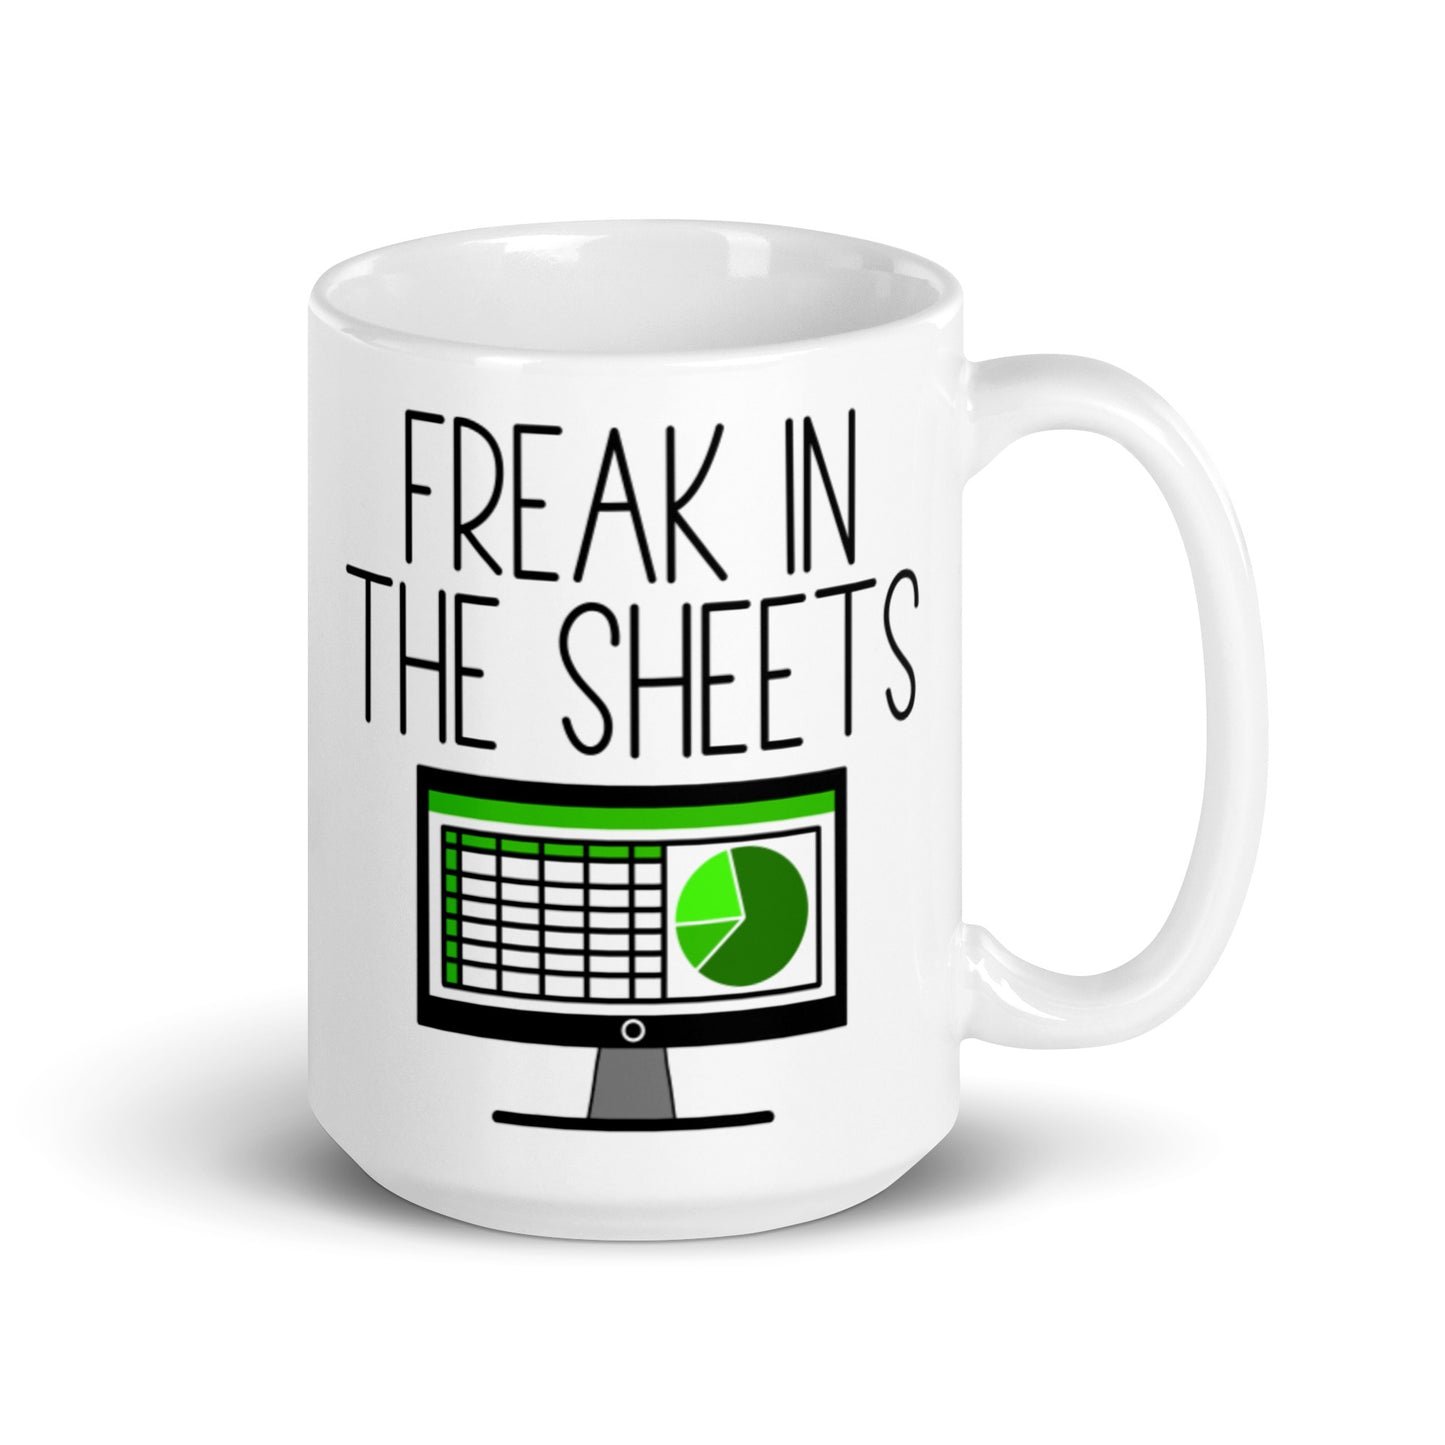 "Freak In The Sheets" Mug